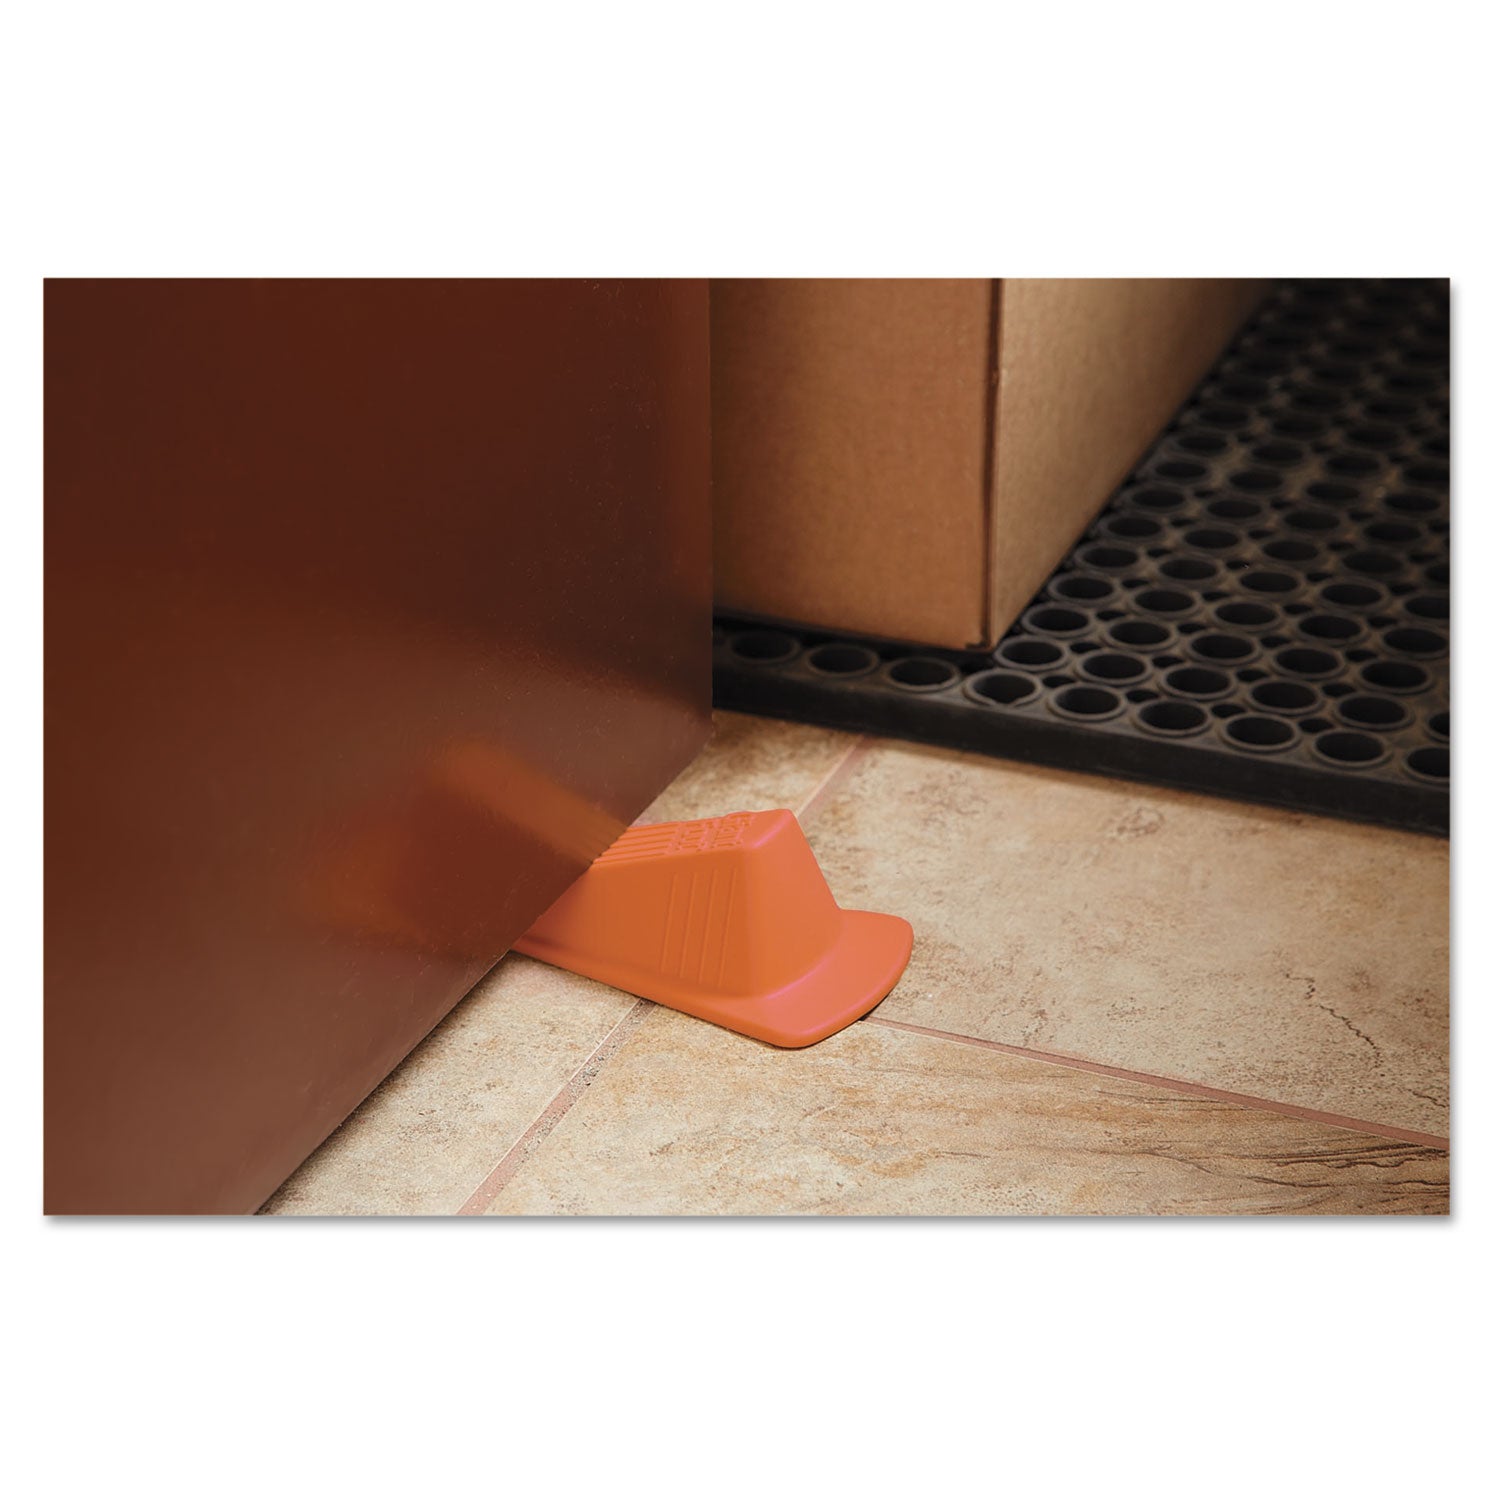 Giant Foot Doorstop, No-Slip Rubber Wedge, 3.5w x 6.75d x 2h, Safety Orange - 